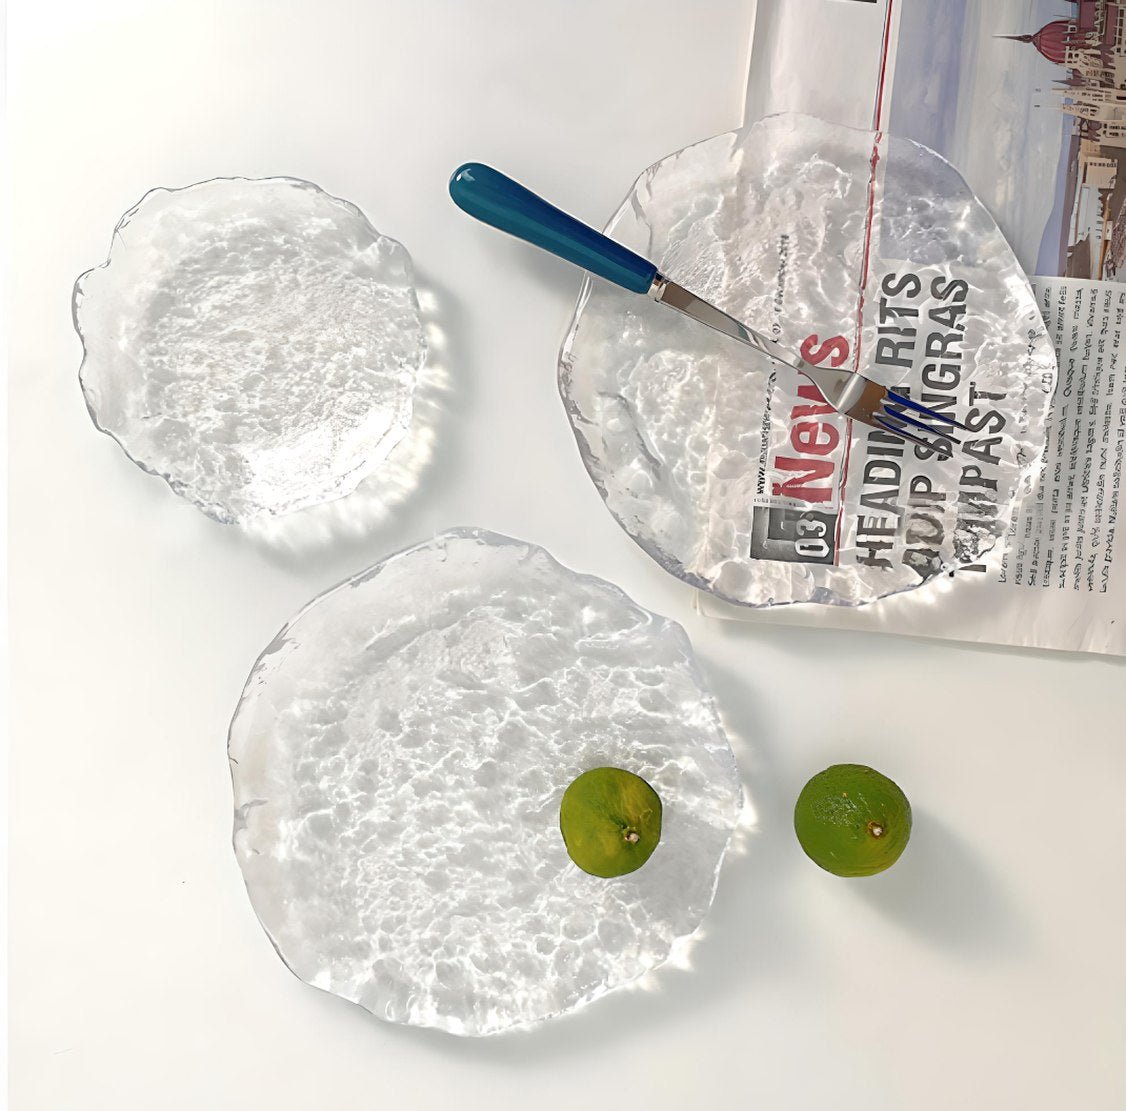 Asymmetrical elegant glass tableware plates